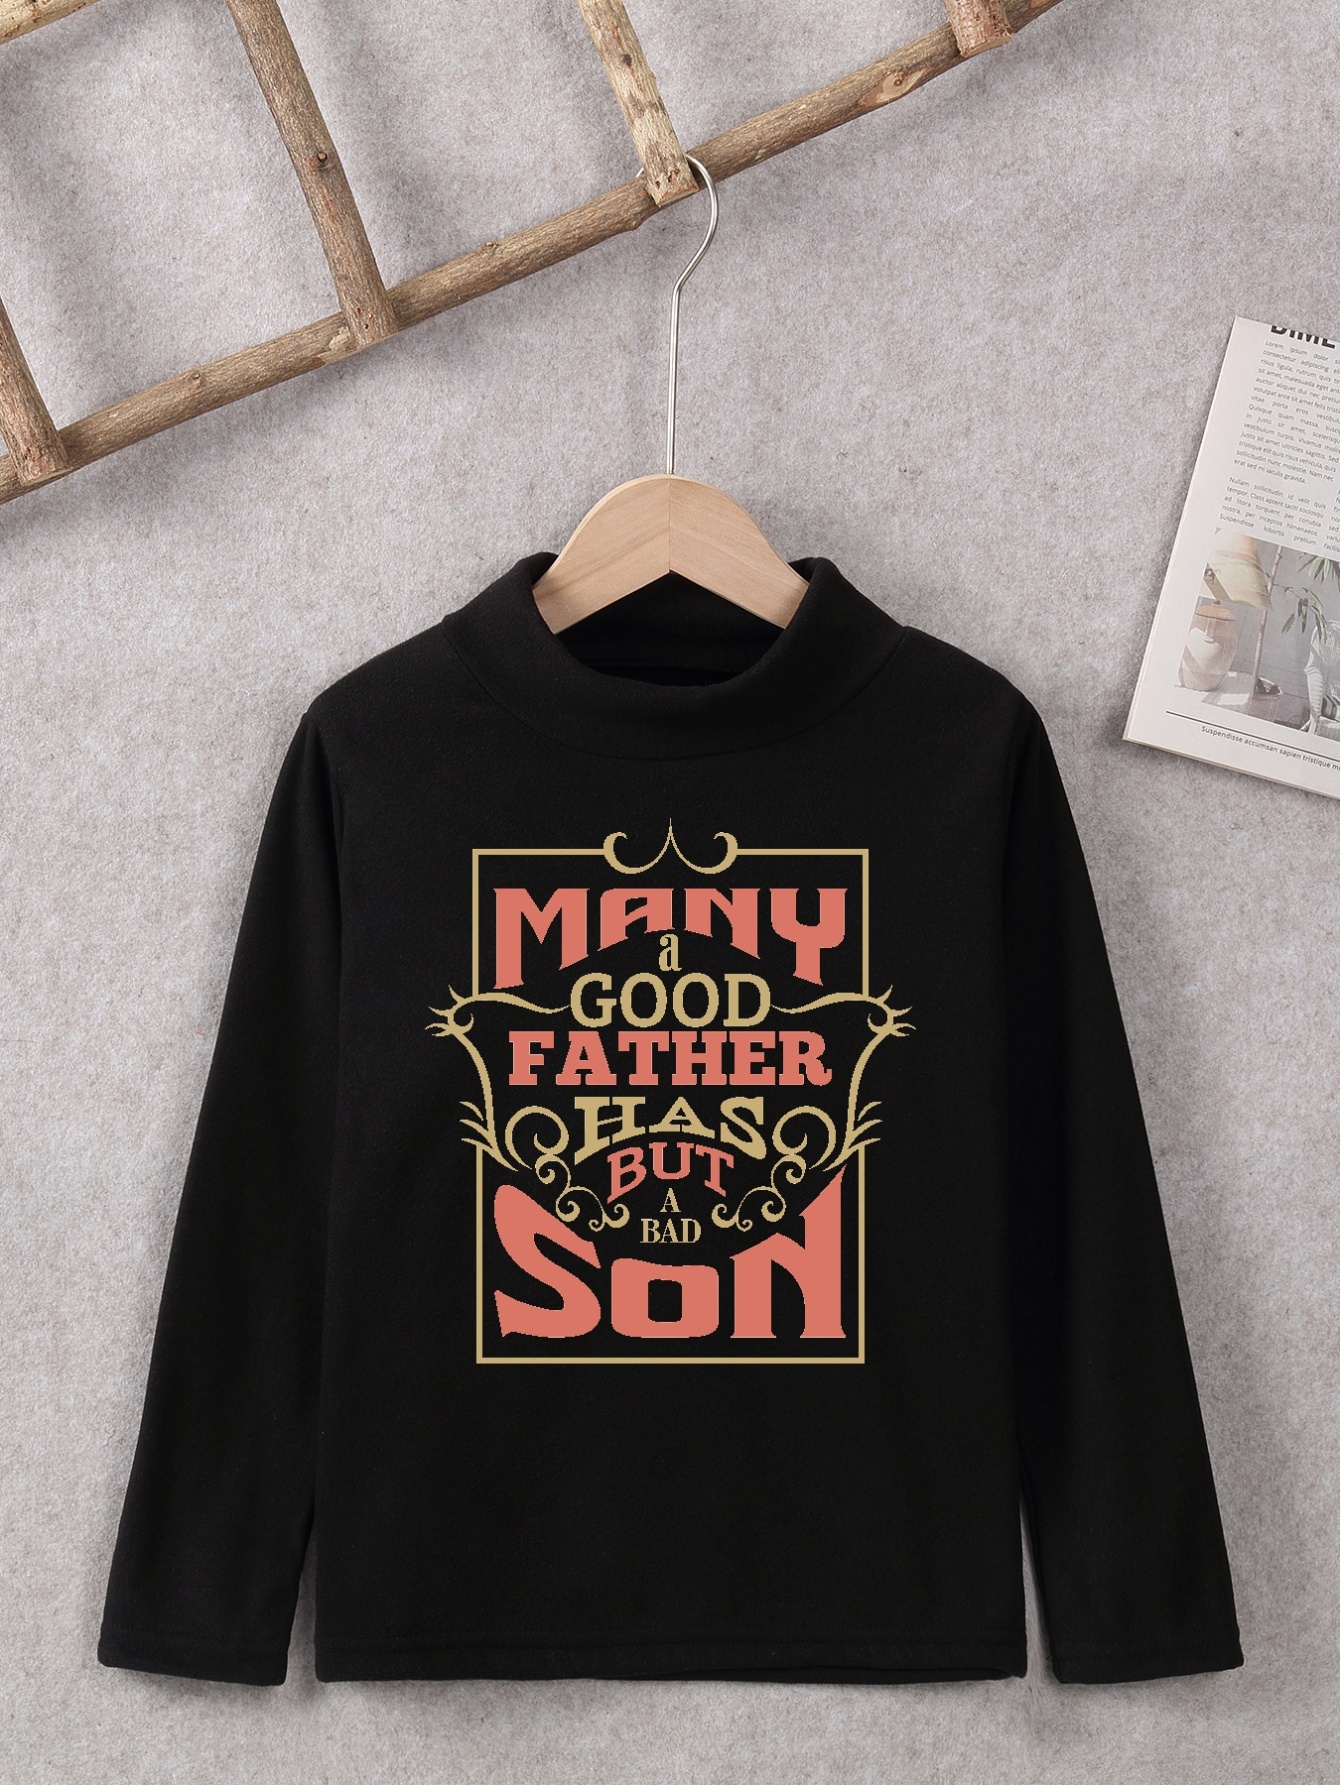 Camiseta manga corta niños Best friends padre e hijo